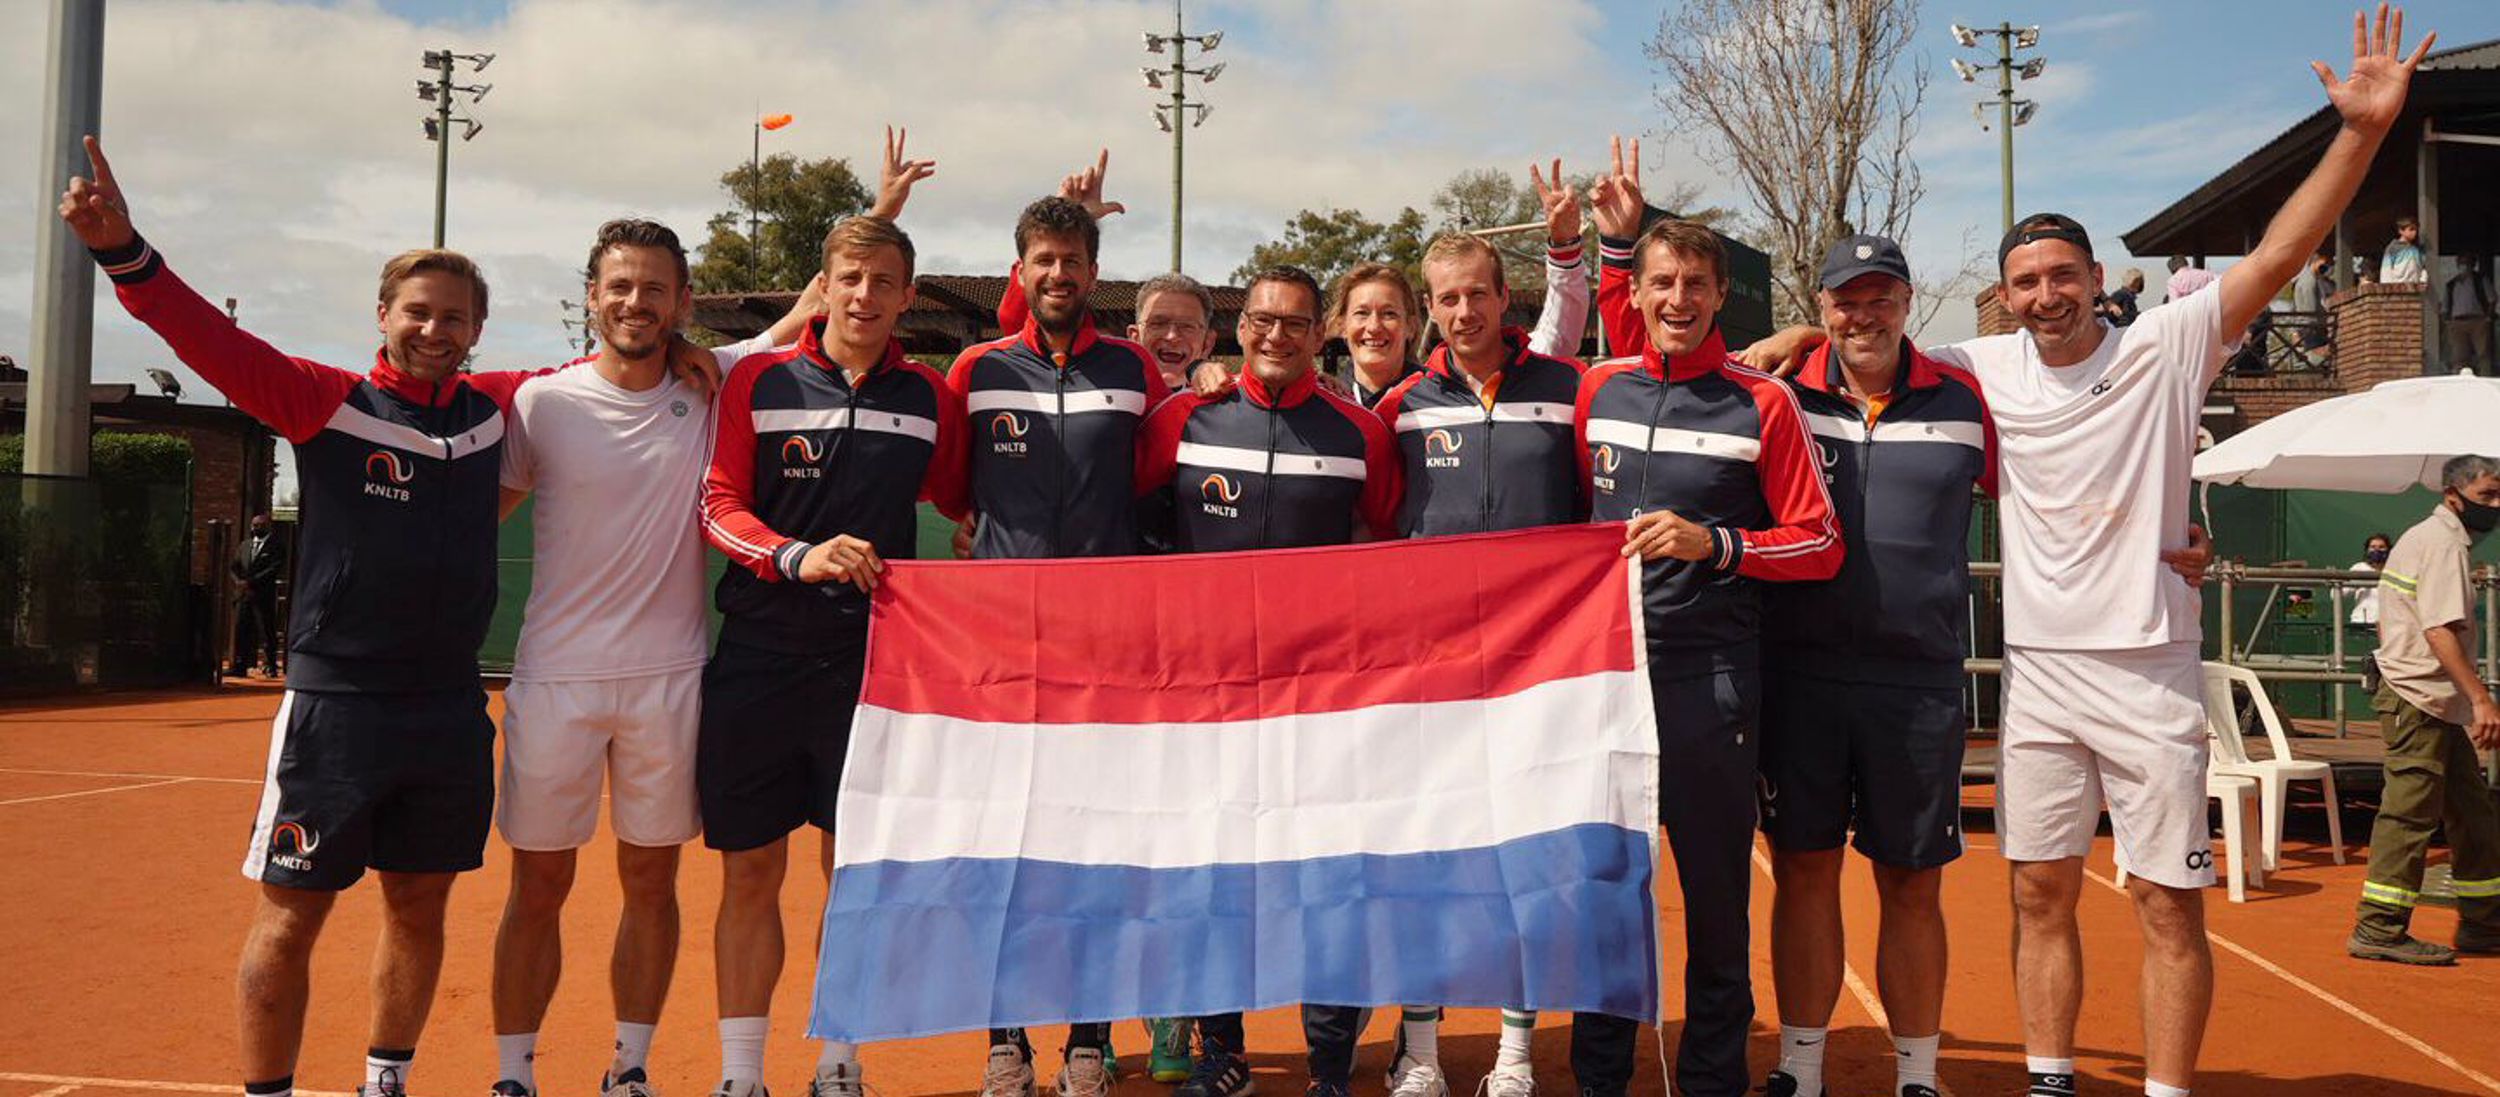 Davis Cup - Groepsfoto 2021